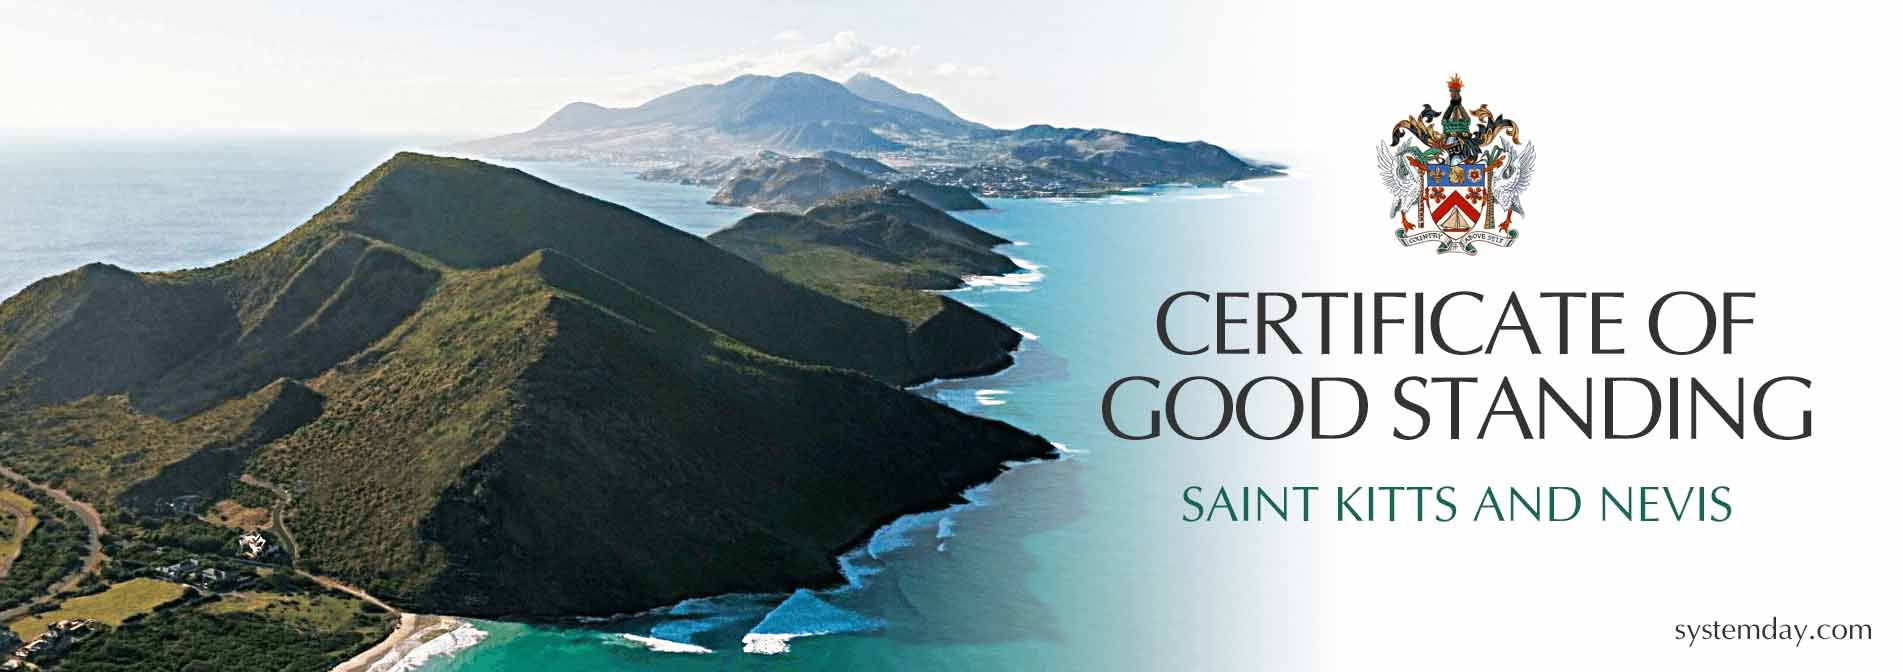 Certificate of Good Standing St Kitts & Nevis